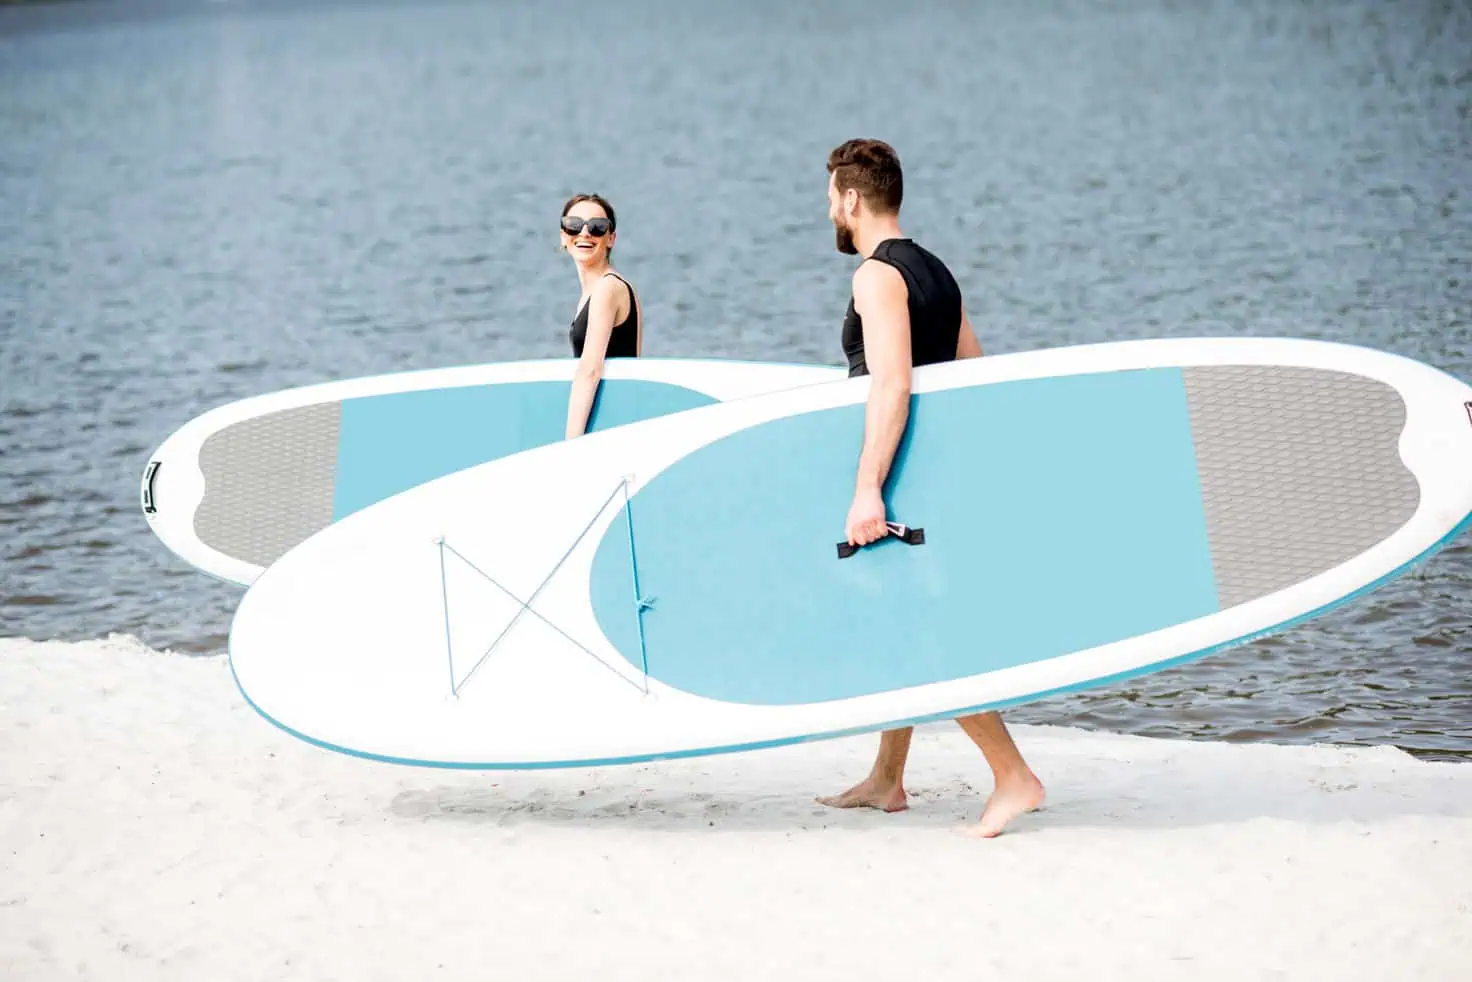 Sunset Beach paddleboard Rentals - Beach Boys Cabanas